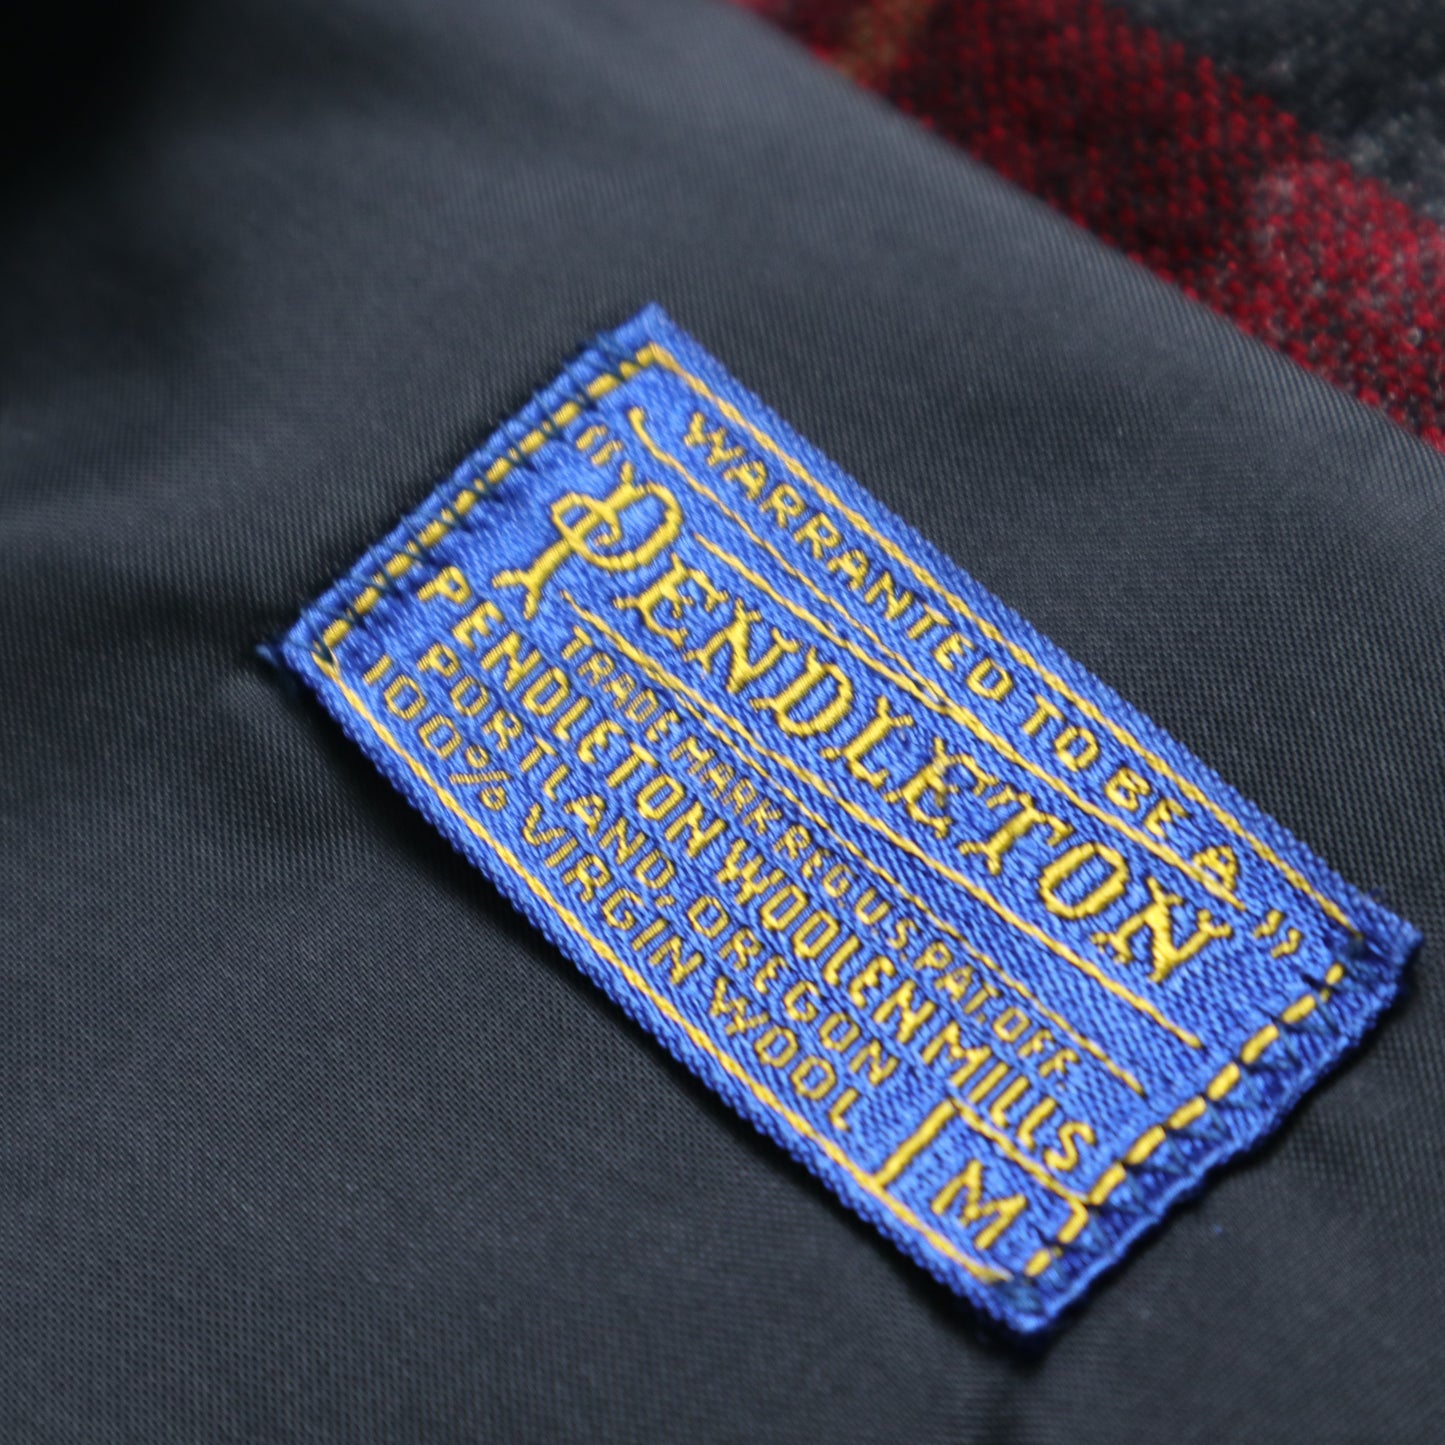 1950s American-made Pendleton wool plaid jacket